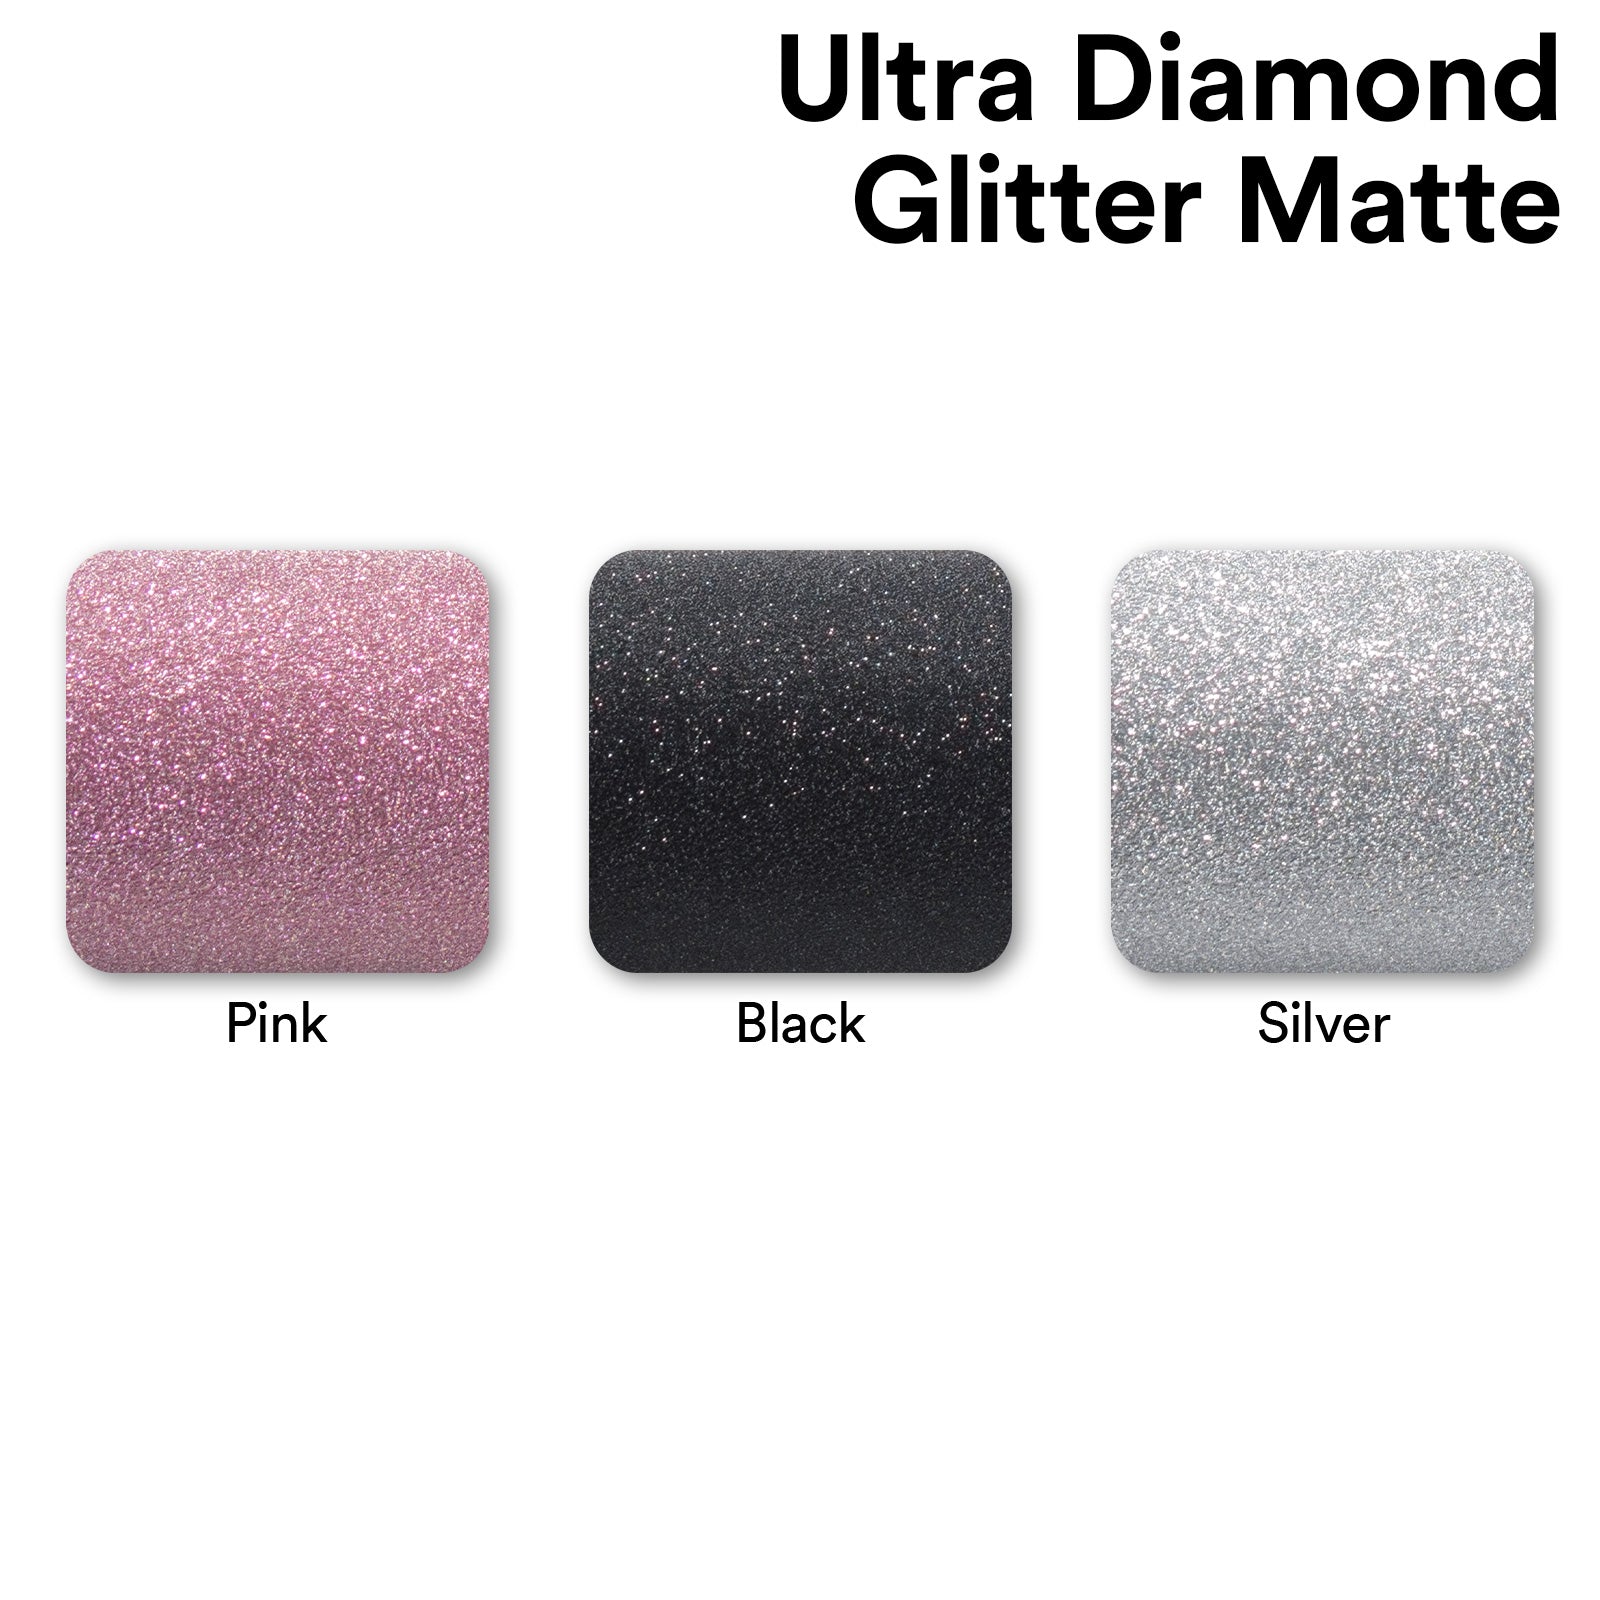 Ultra Diamond Glitter Matte Silver Vinyl Wrap